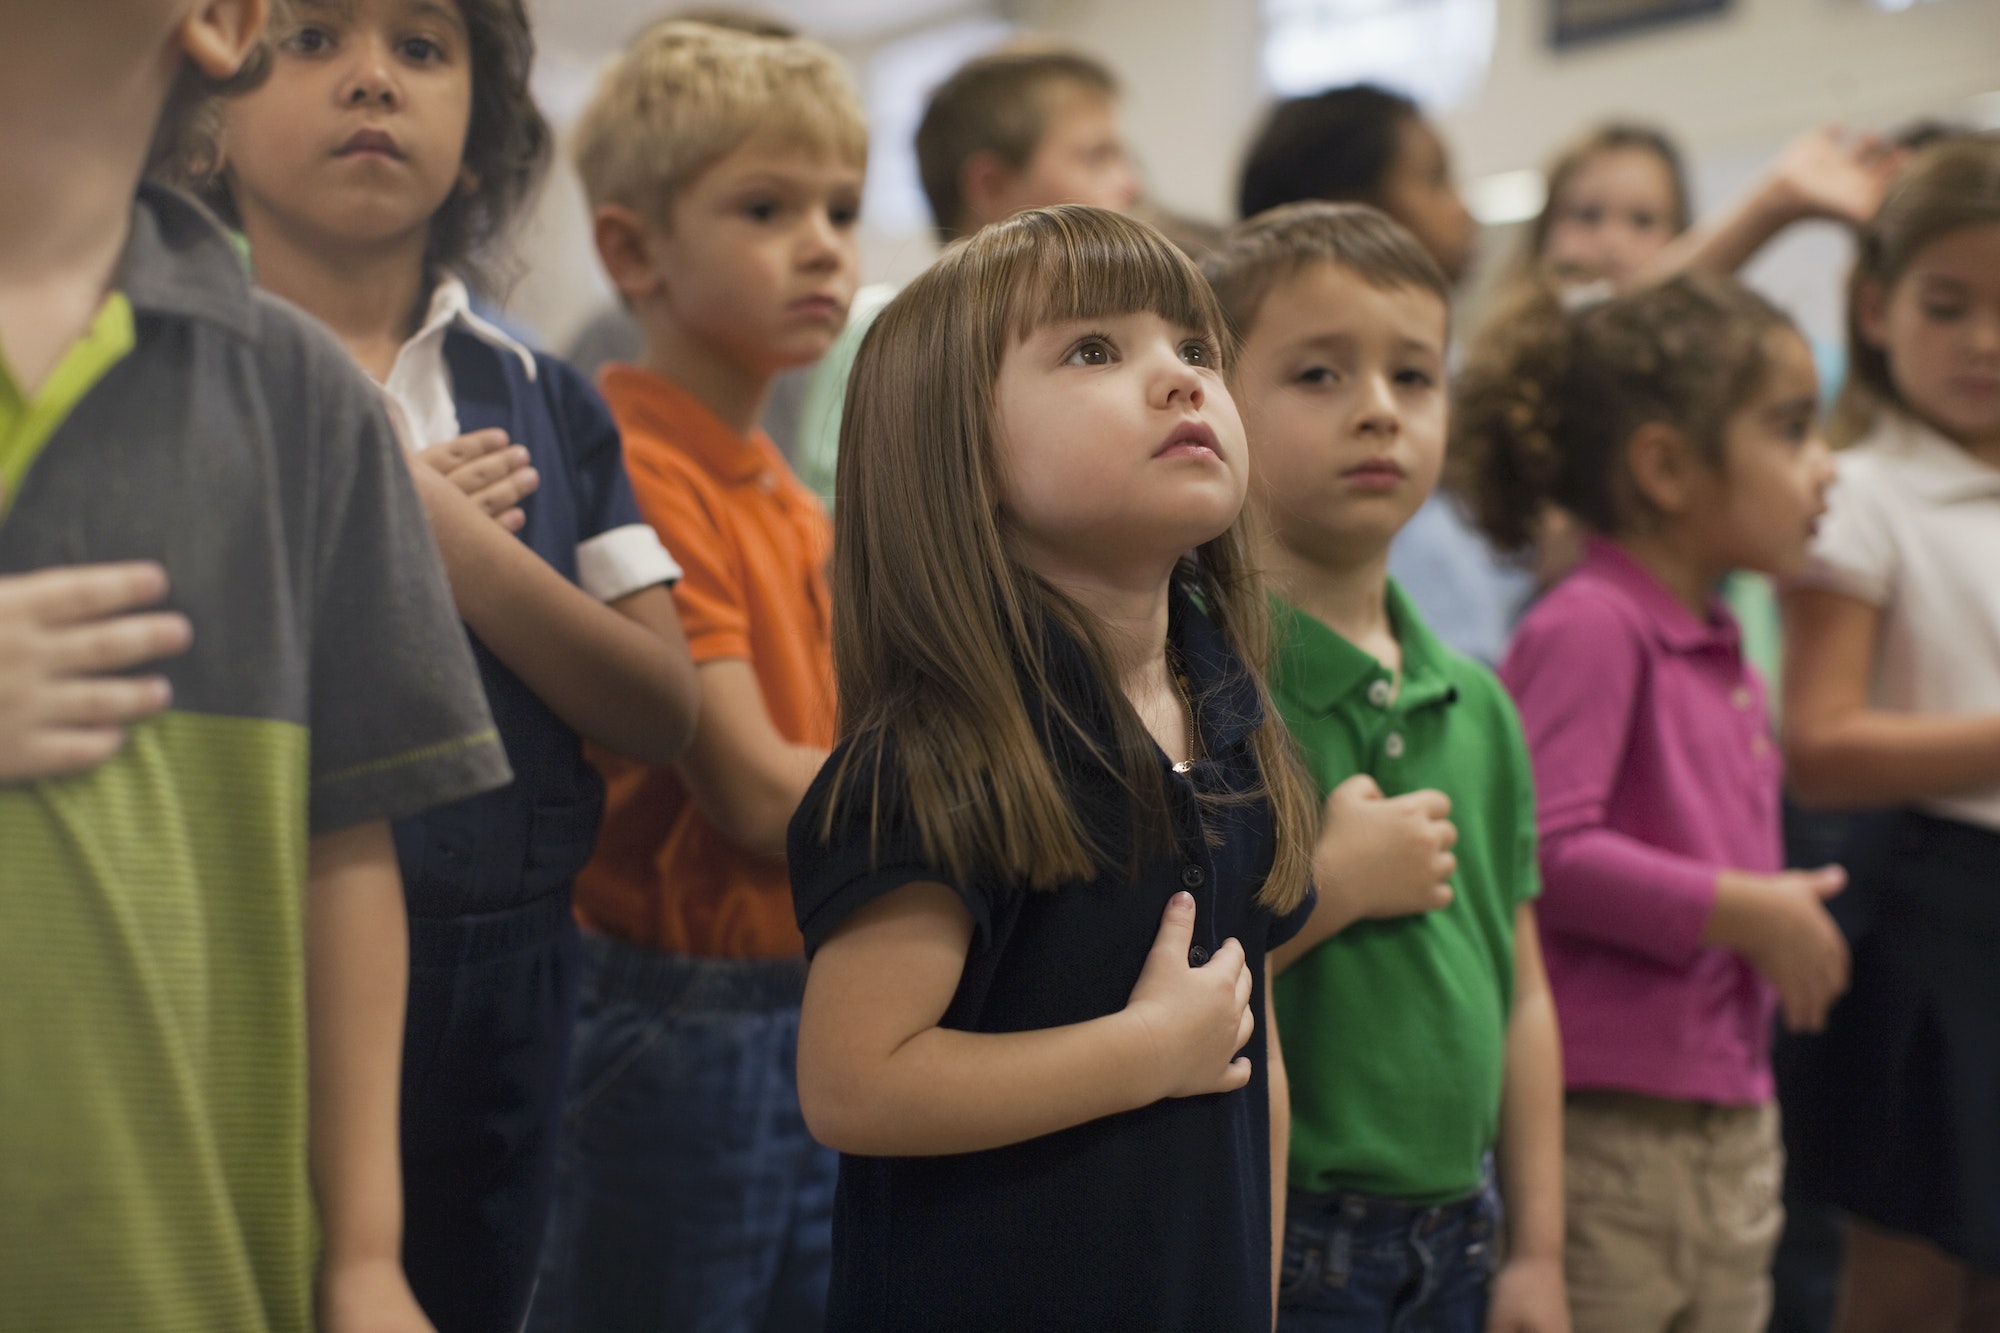 Children reciting Pledge of Allegiance in school